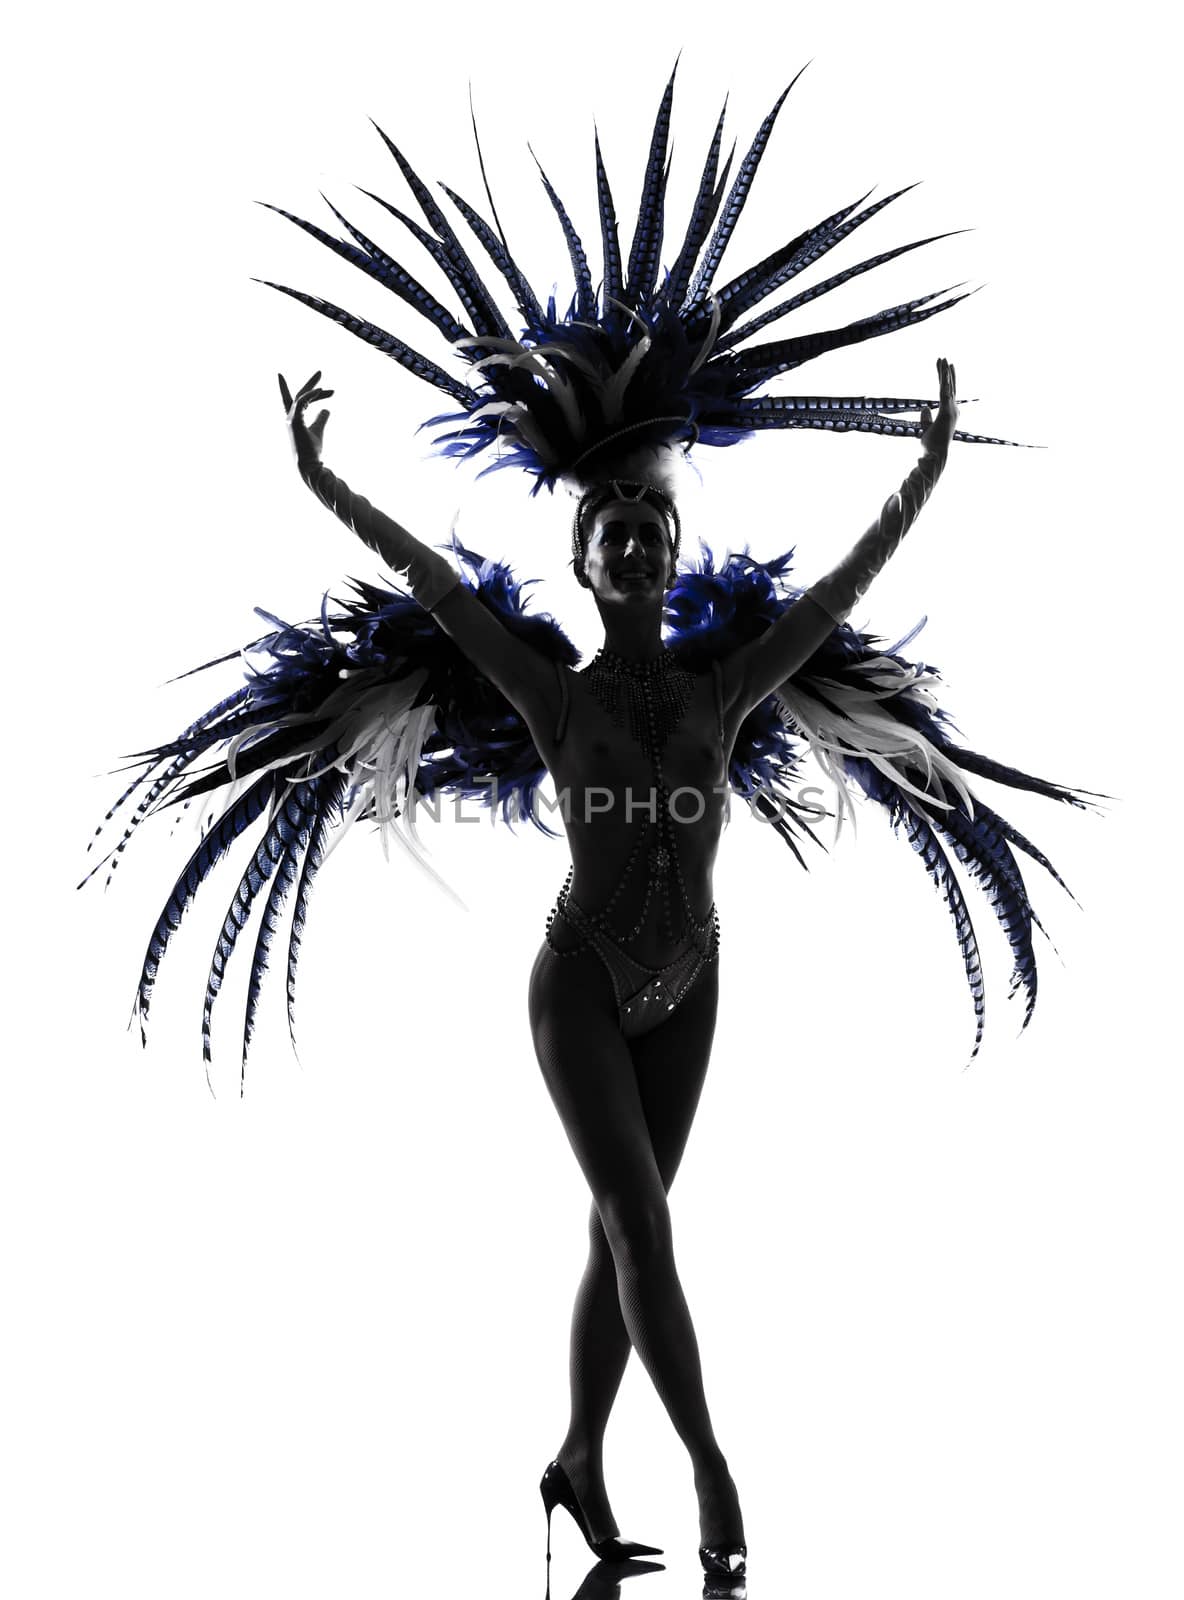 showgirl woman revue dancer dancing silhouette by PIXSTILL